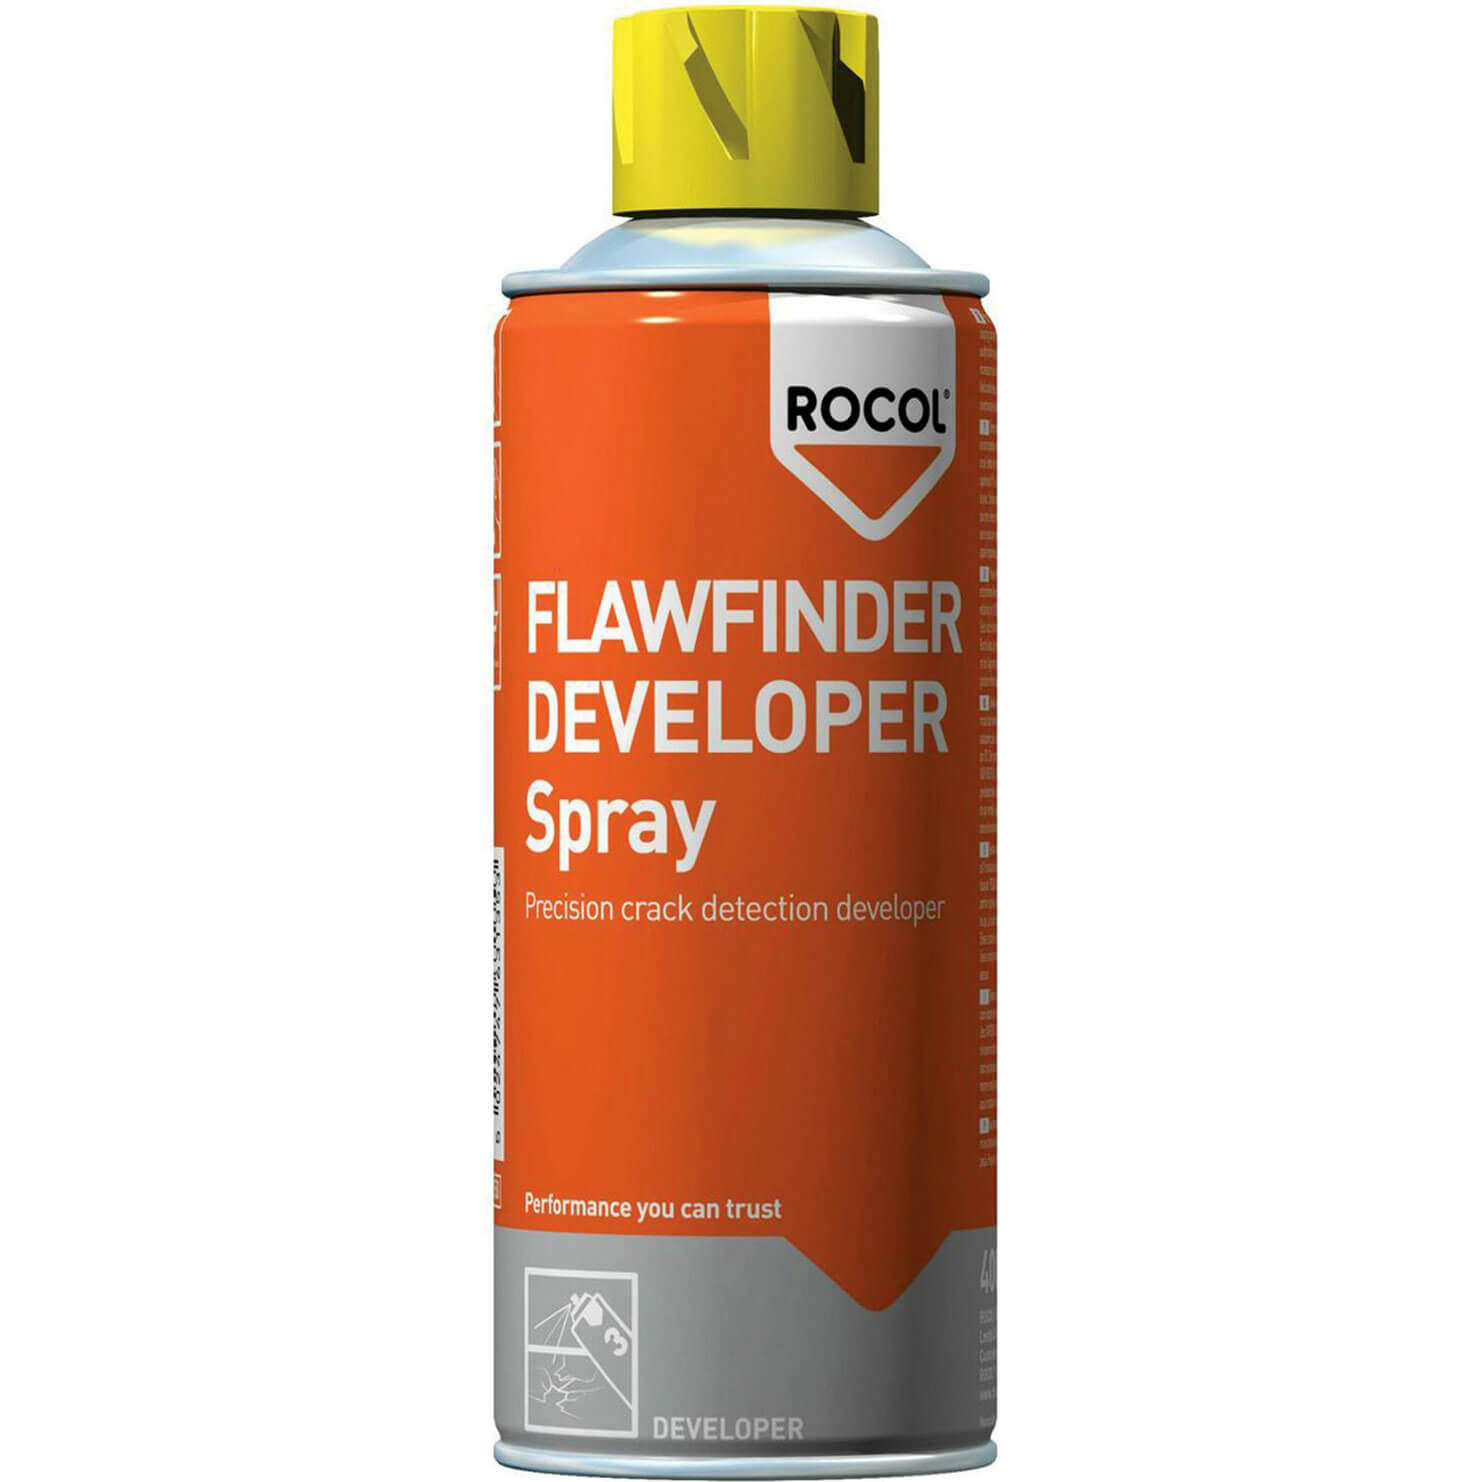 Image of Rocol Flaw finder Developer Spray 400ml